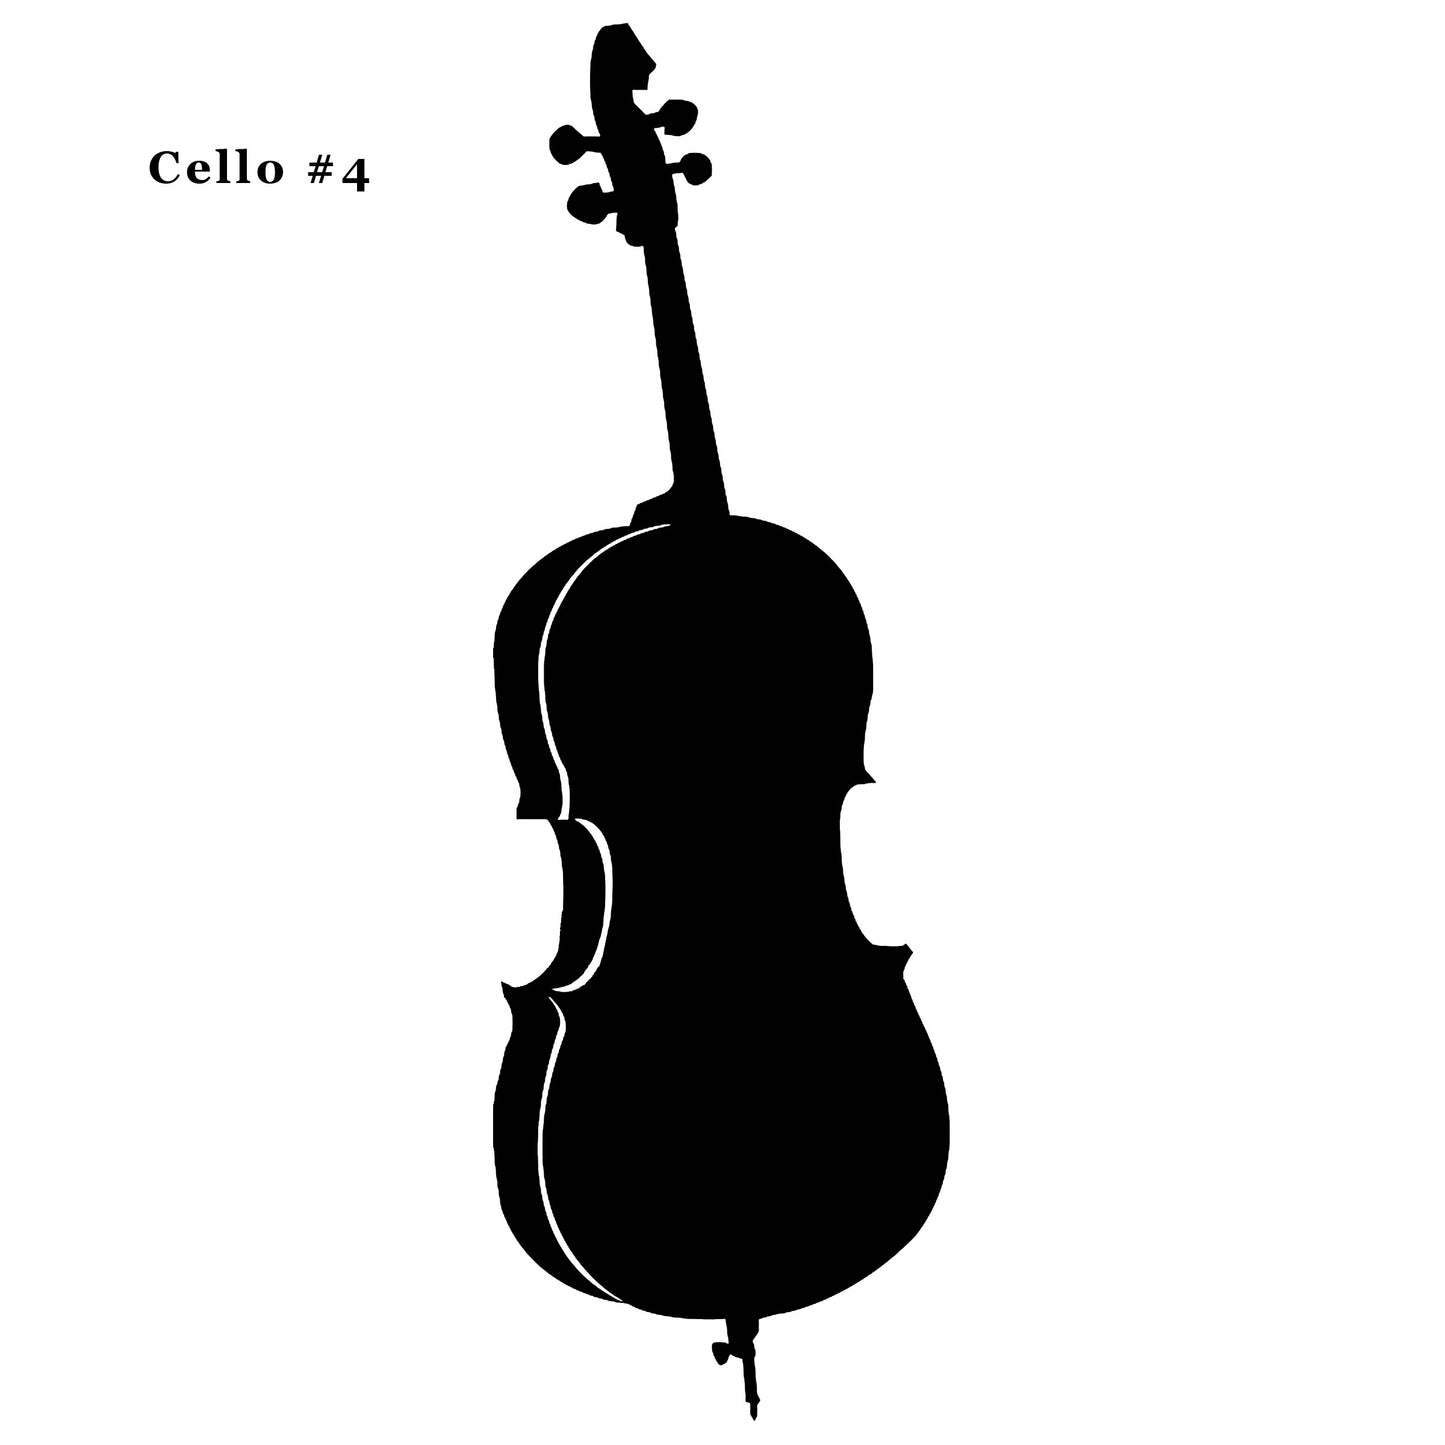 Cello - Lightweight Drawstring Bag.